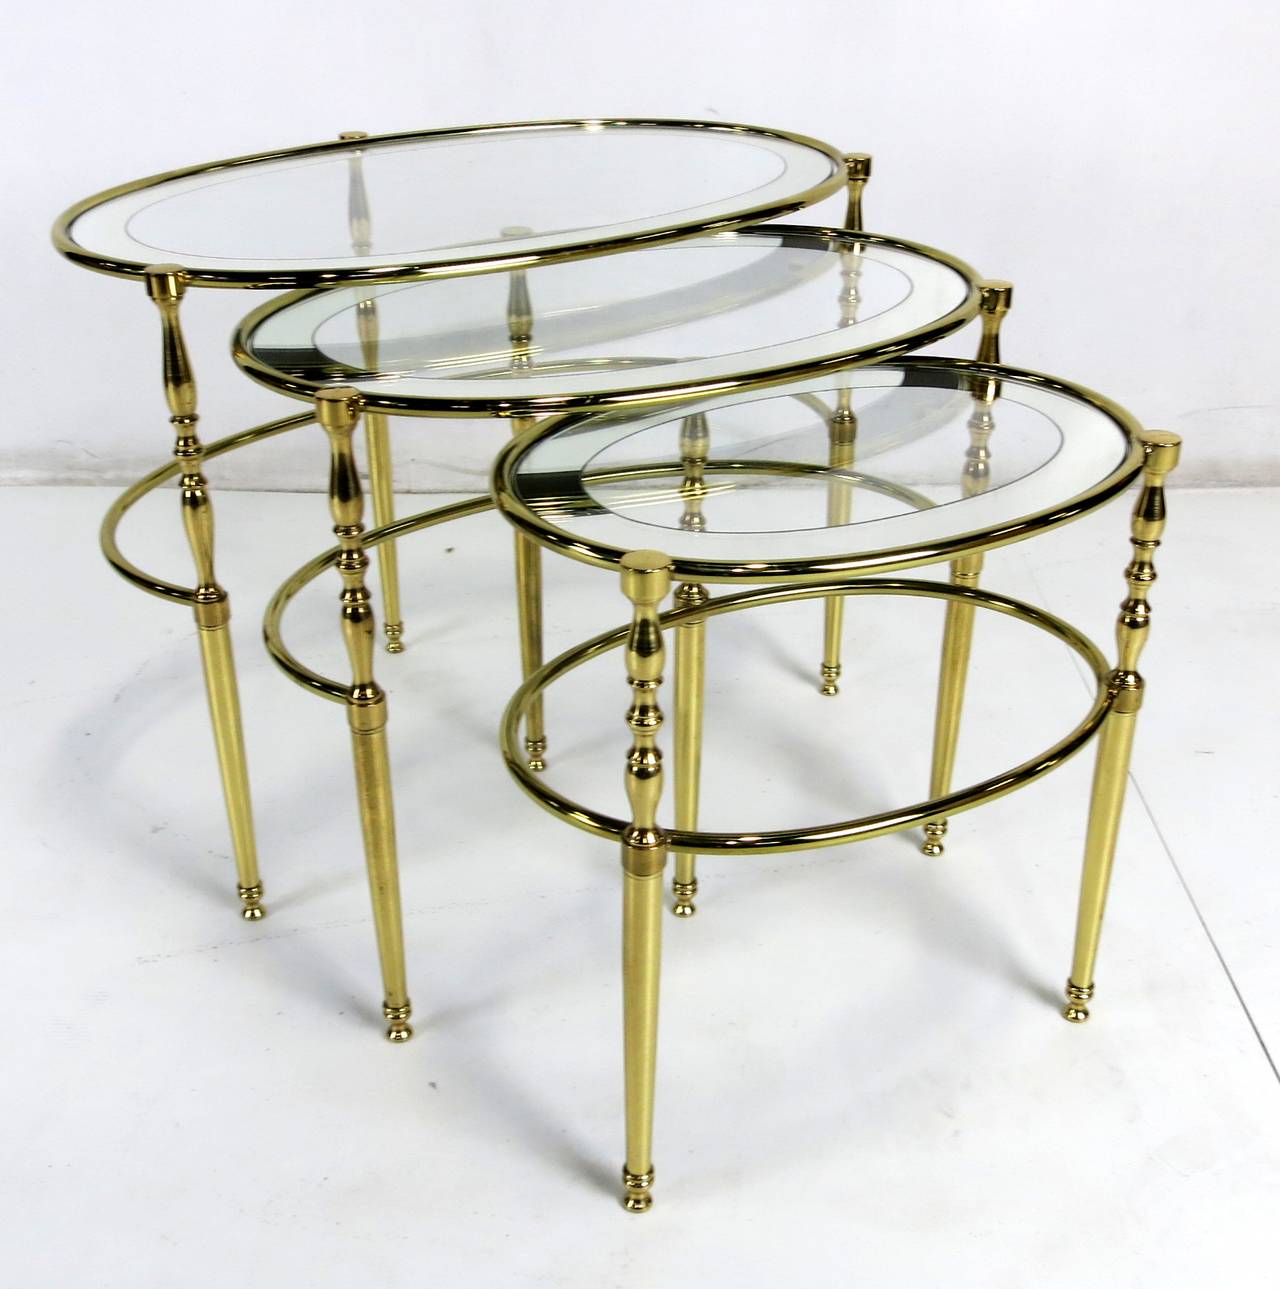 Gorgeous set of three brass Chiavarine nesting tables with mirror bordered glass tops. 

Dimensions:
Large: 25 x 16 x 19.
Medium: 20.5 x 14 x 18.
Small: 16 x 11 x 17.